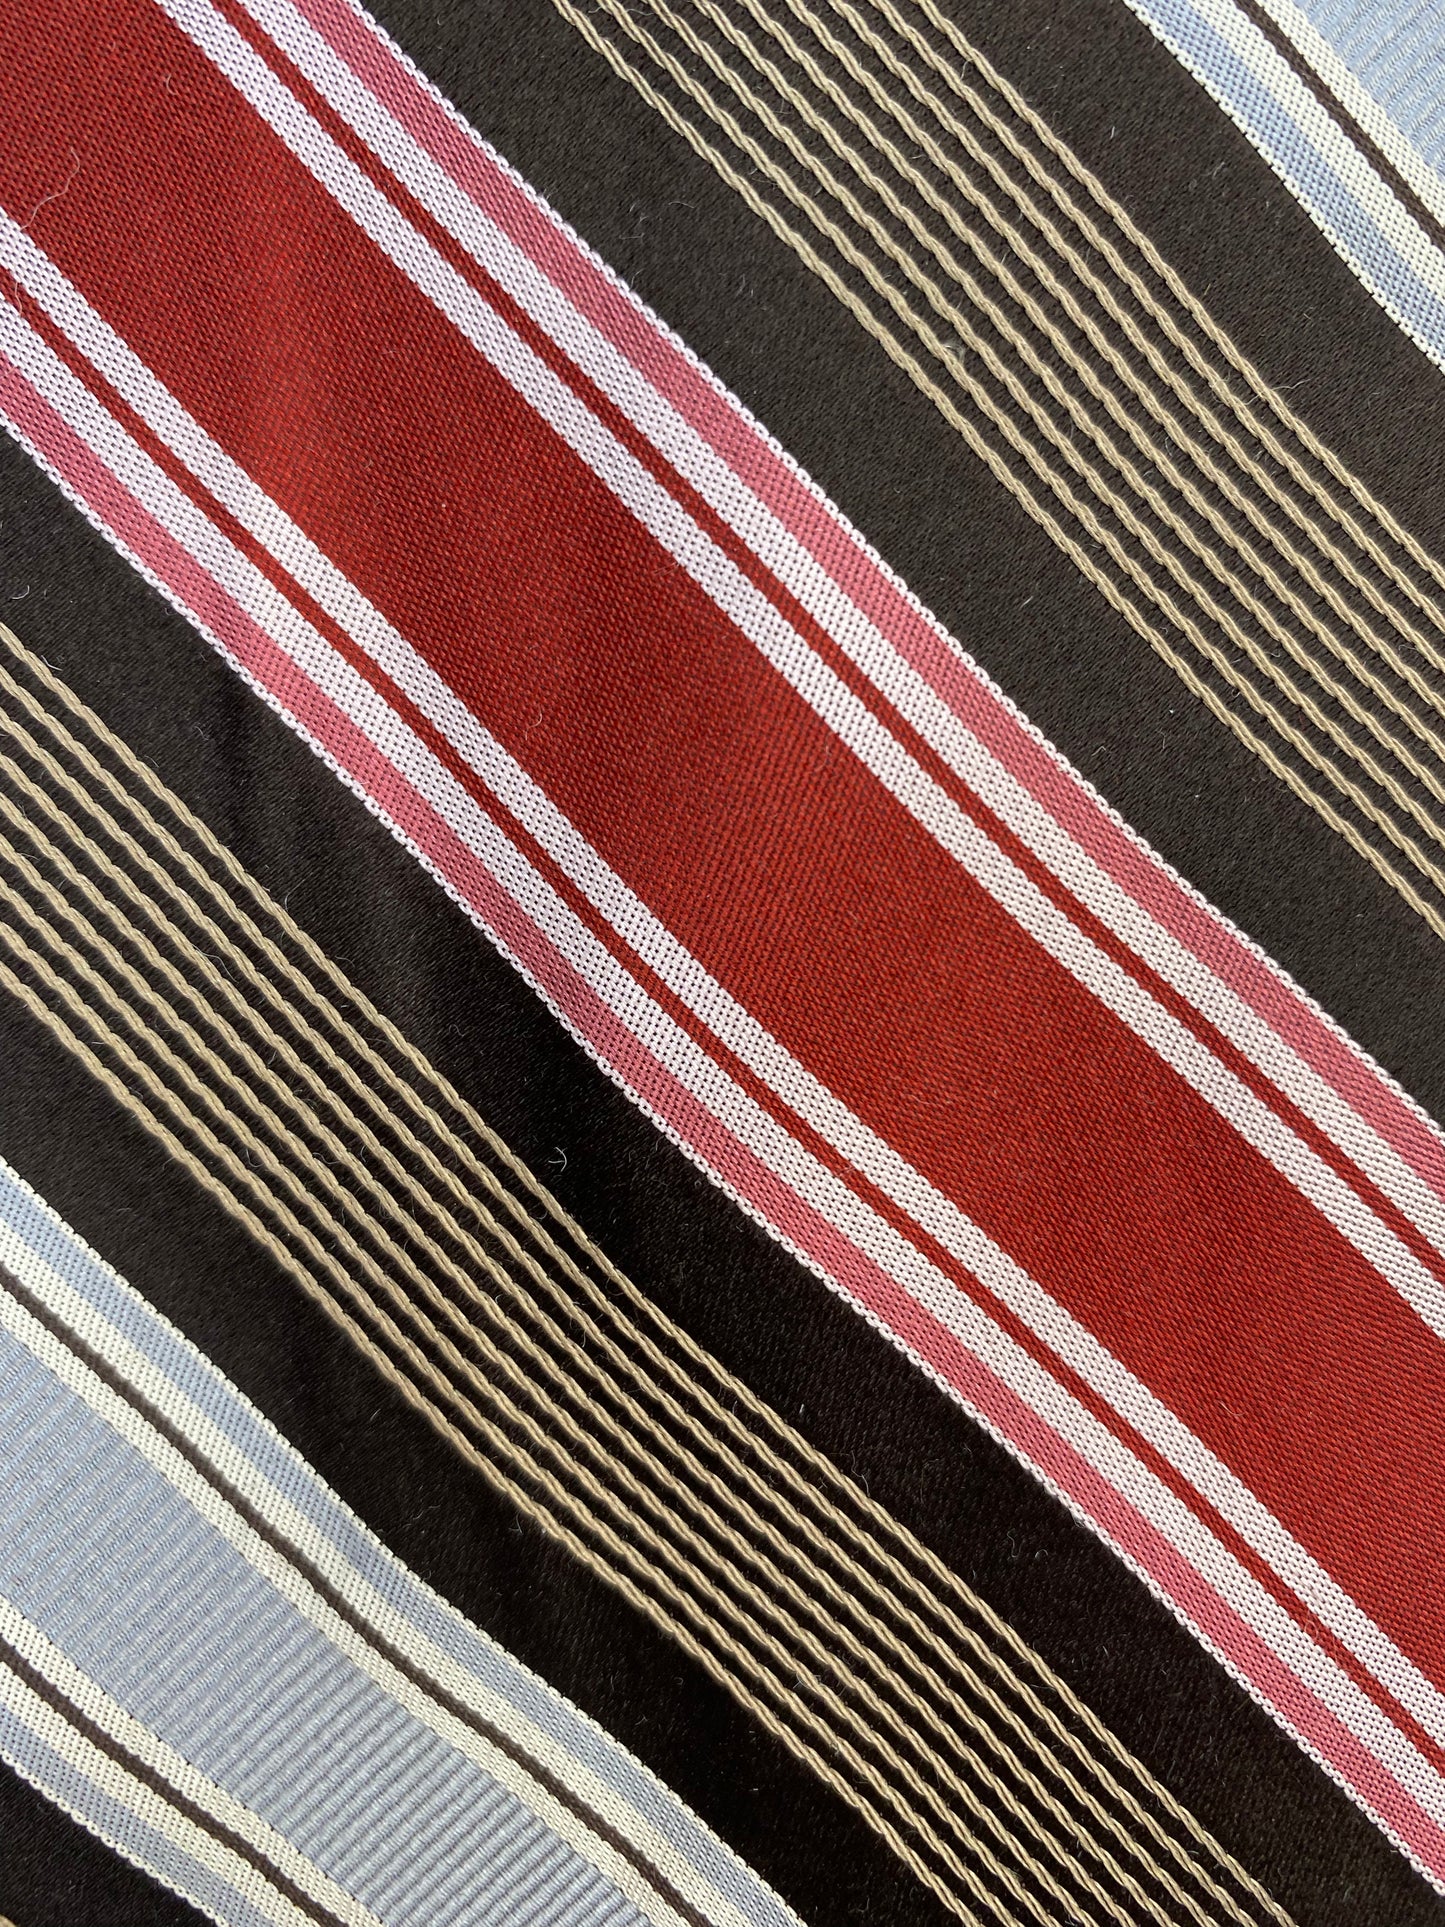 90s Deadstock Silk Necktie, Vintage Wine/ Brown/ Blue Diagonal Stripe Pattern Tie, NOS